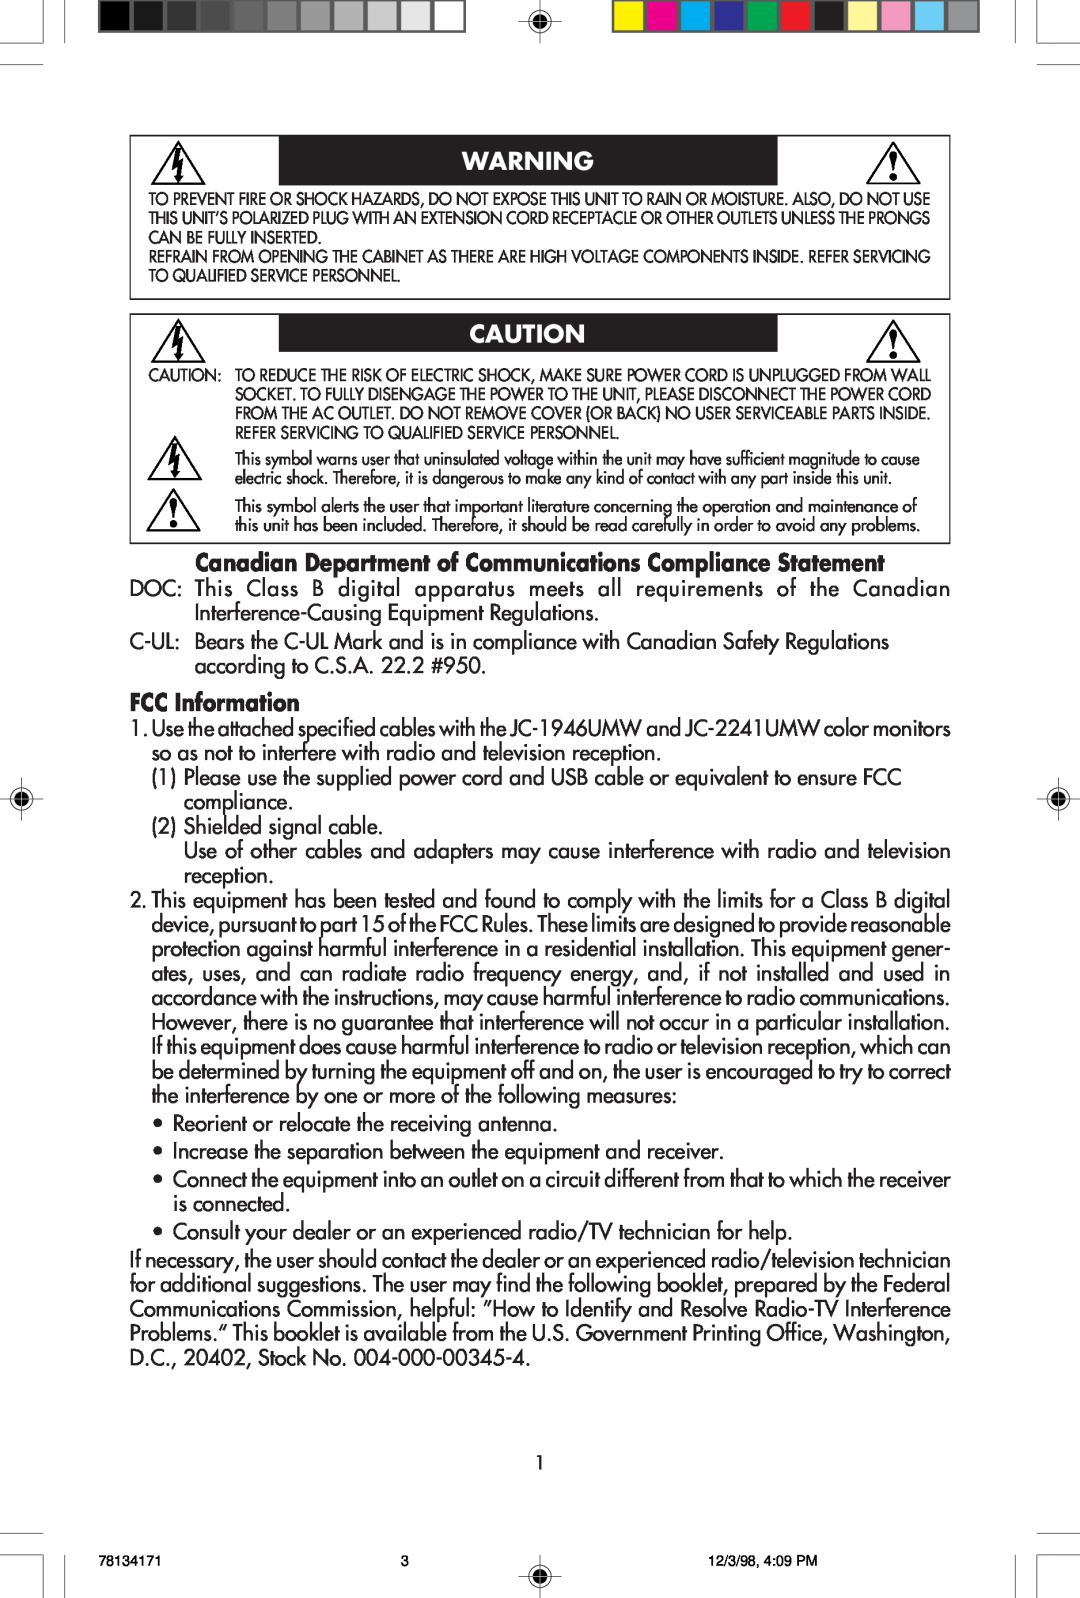 NEC JC-1946UMW, JC-2241UMW user manual Canadian Department of Communications Compliance Statement, FCC Information 